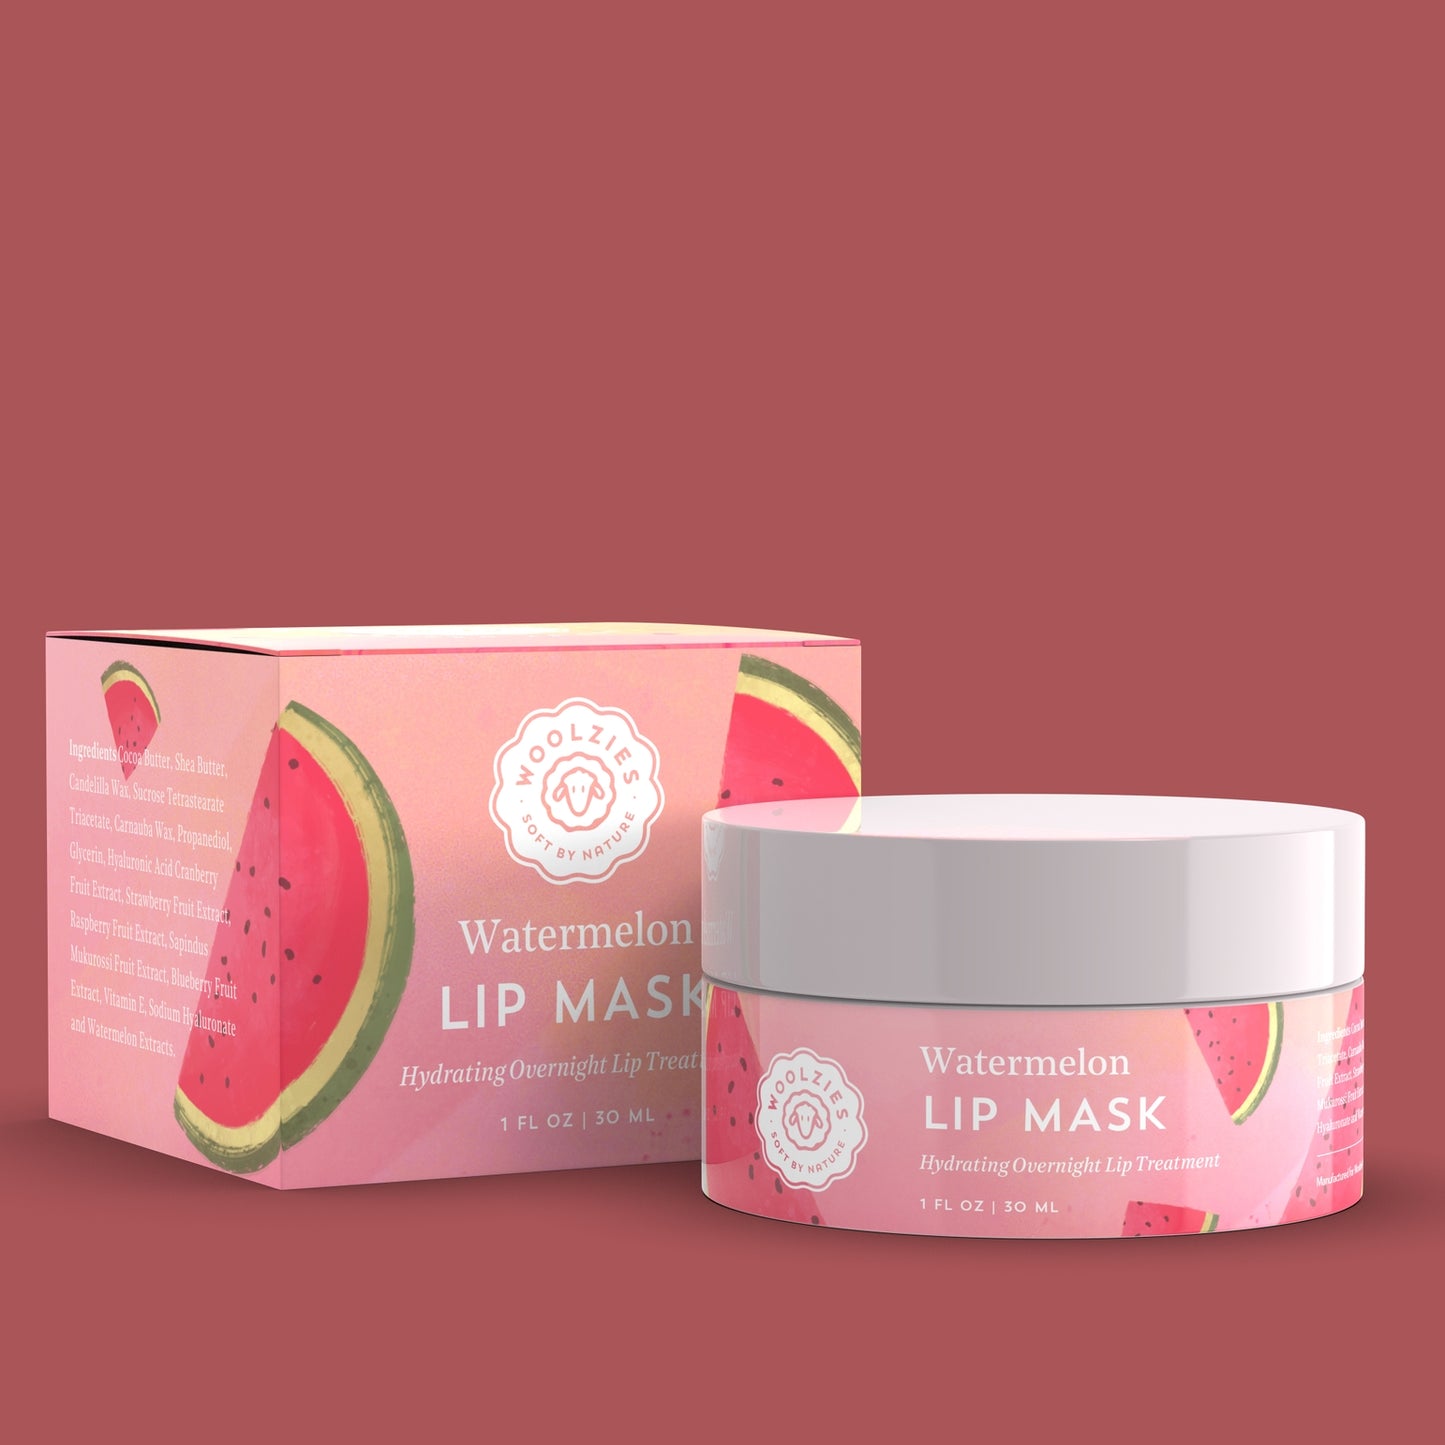 Watermelon Lip Mask